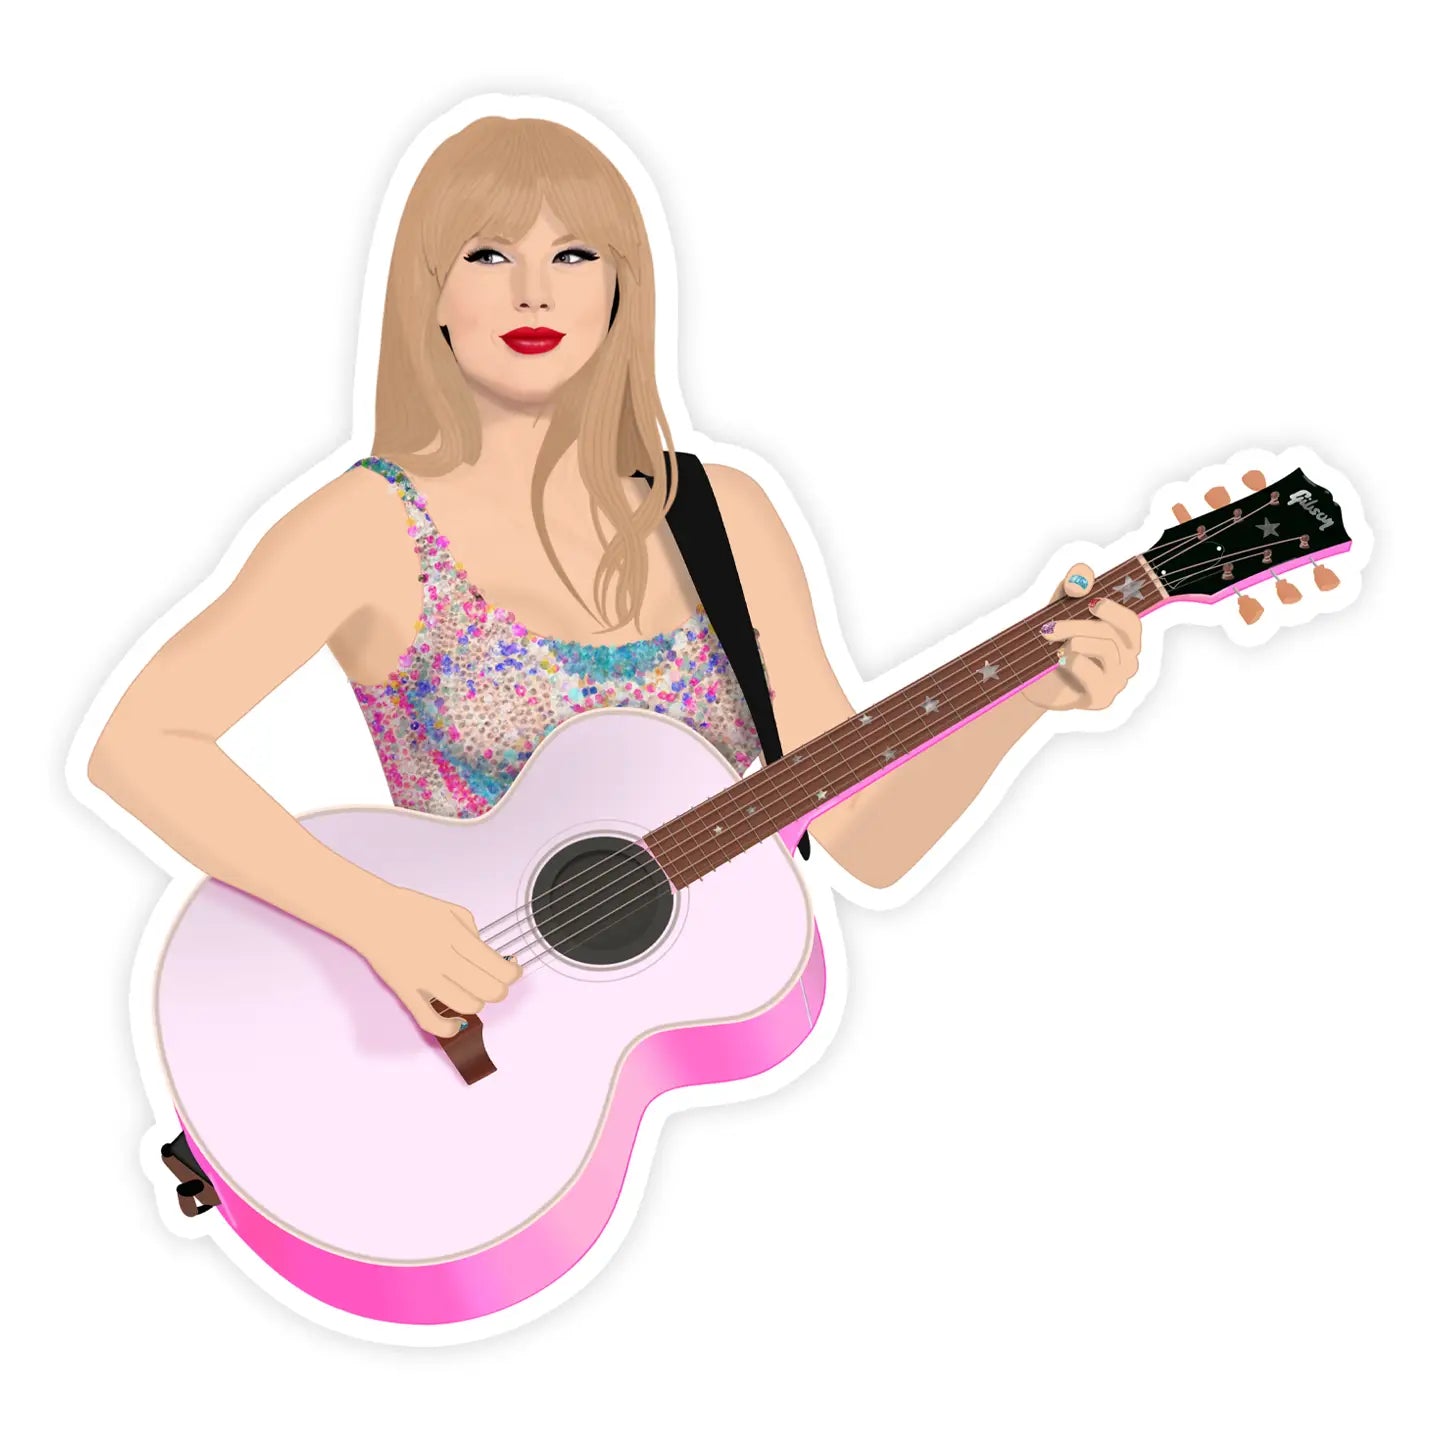 Taylor Swift Eras Tour Glitter Sticker – Bri Bowers